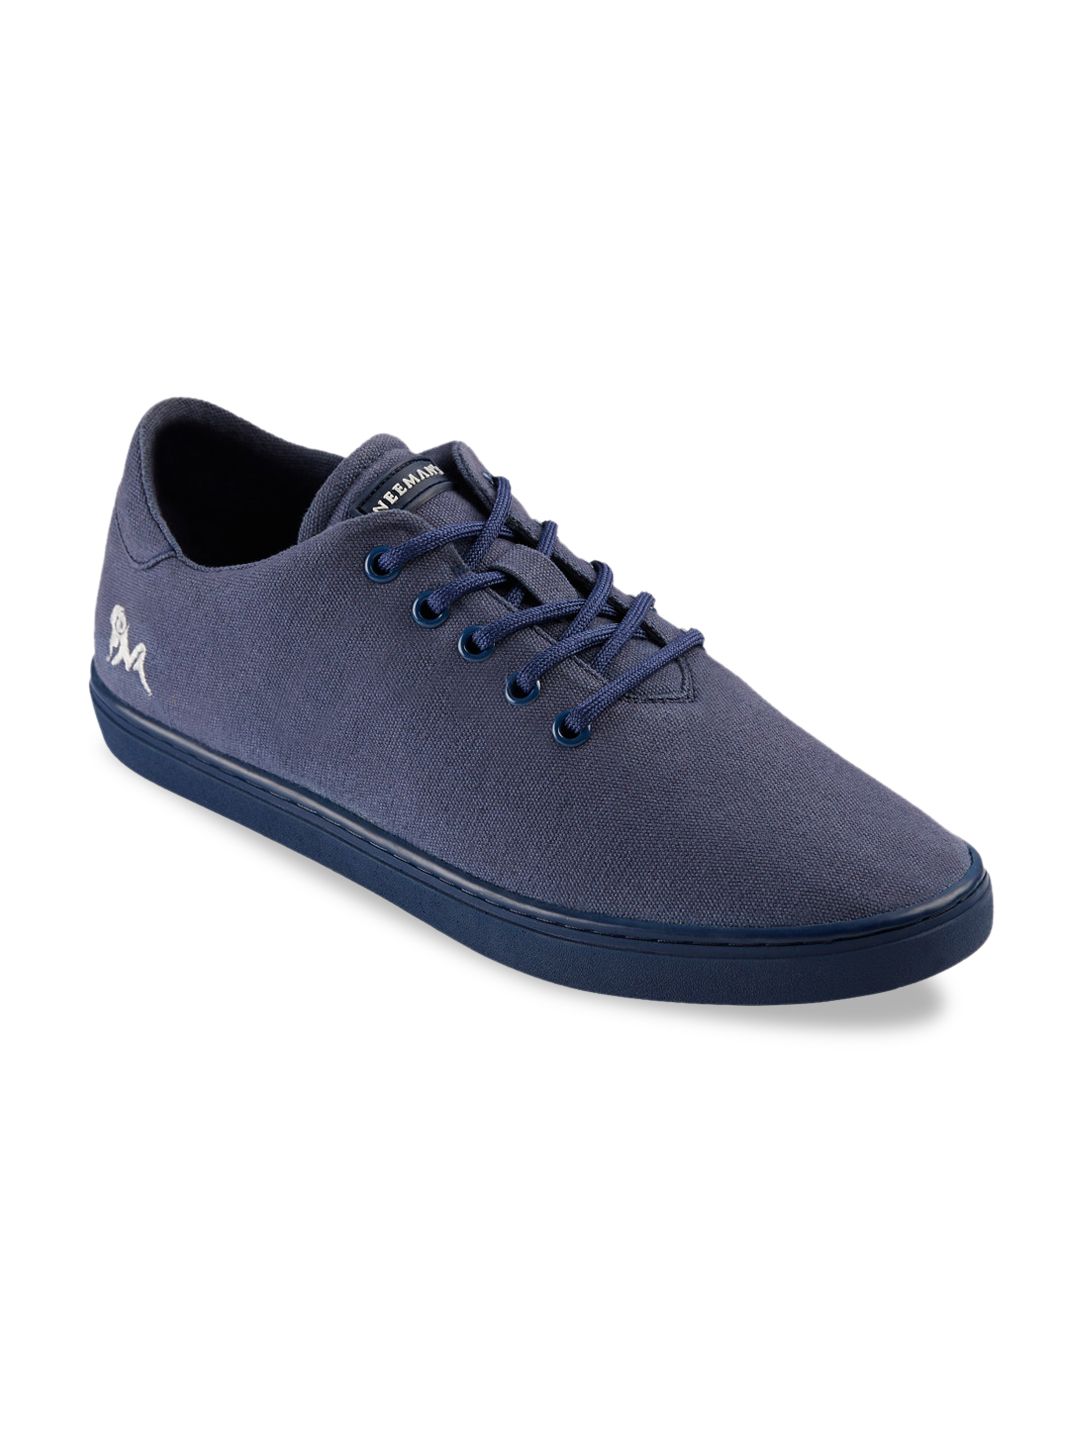 NEEMANS Unisex Navy Blue Cotton Classic Sneakers Price in India